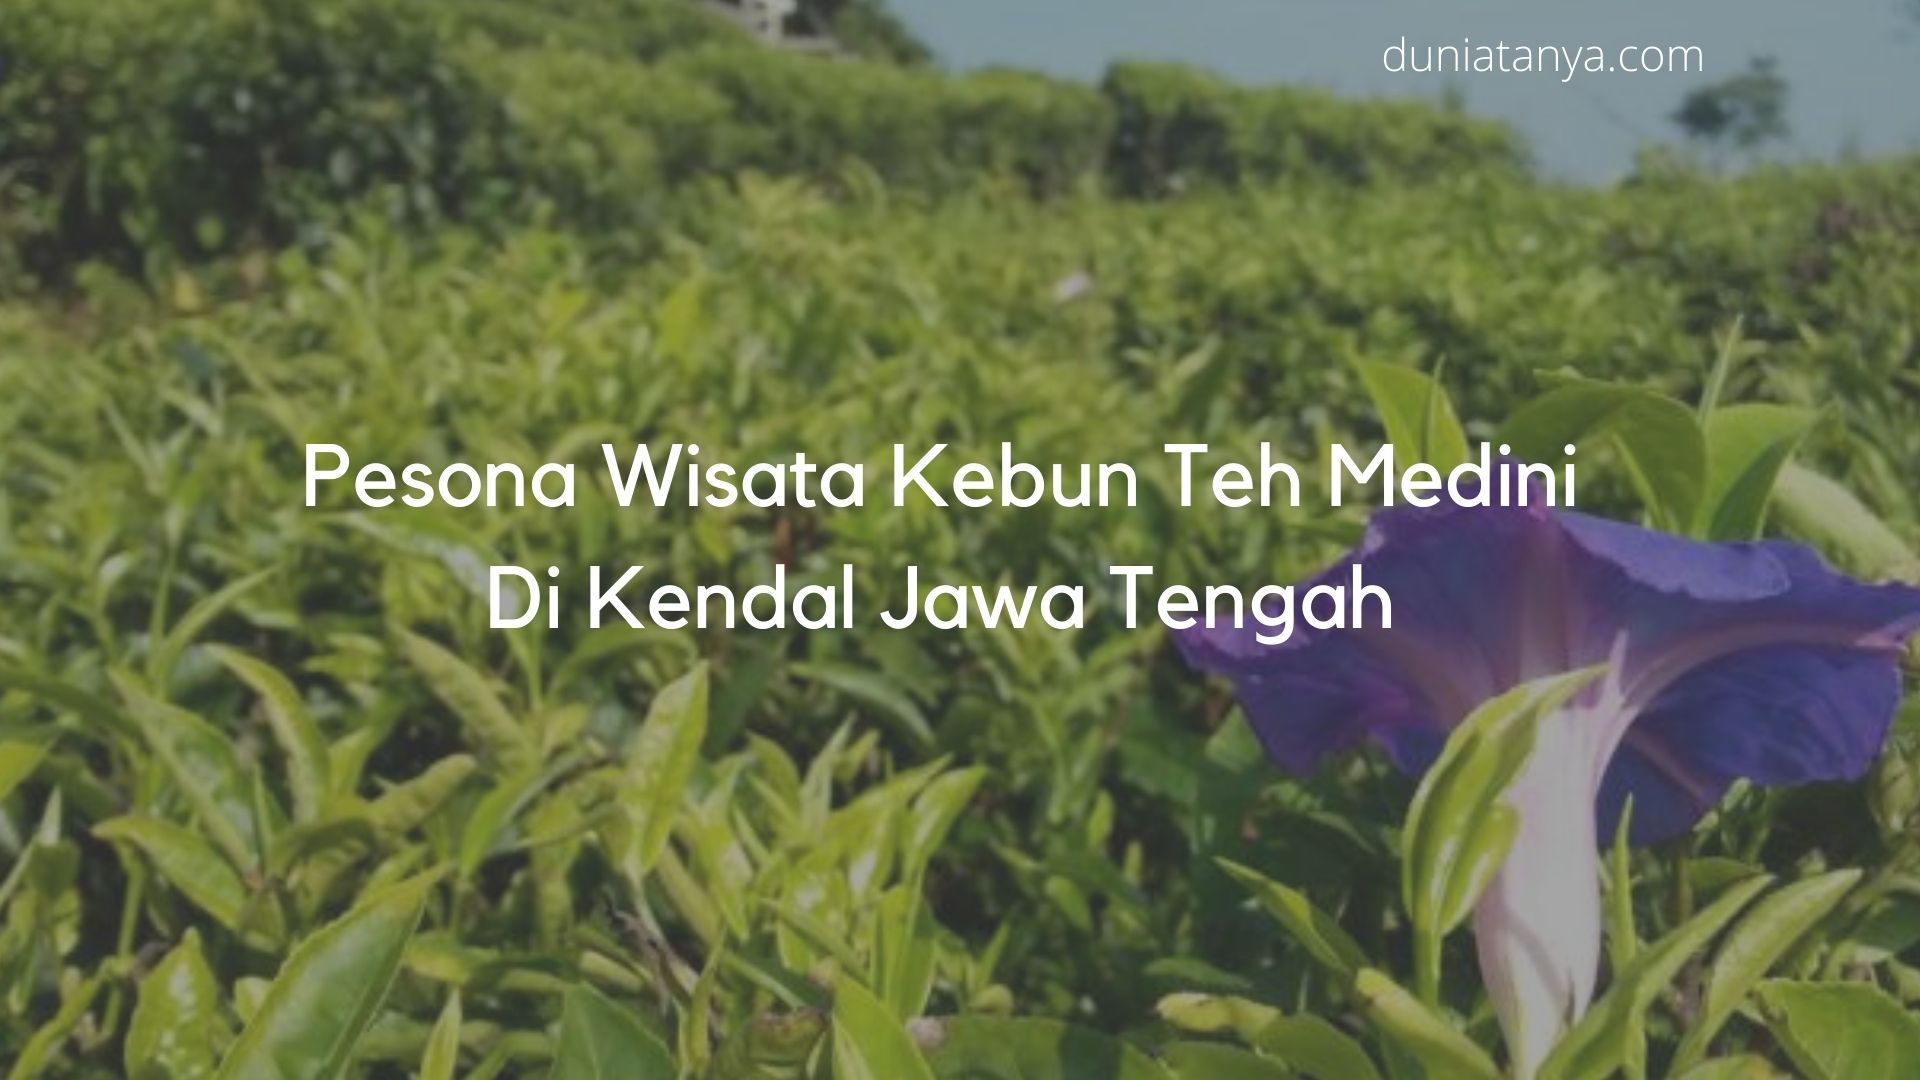 You are currently viewing Pesona Wisata Kebun Teh Medini Di Kendal Jawa Tengah